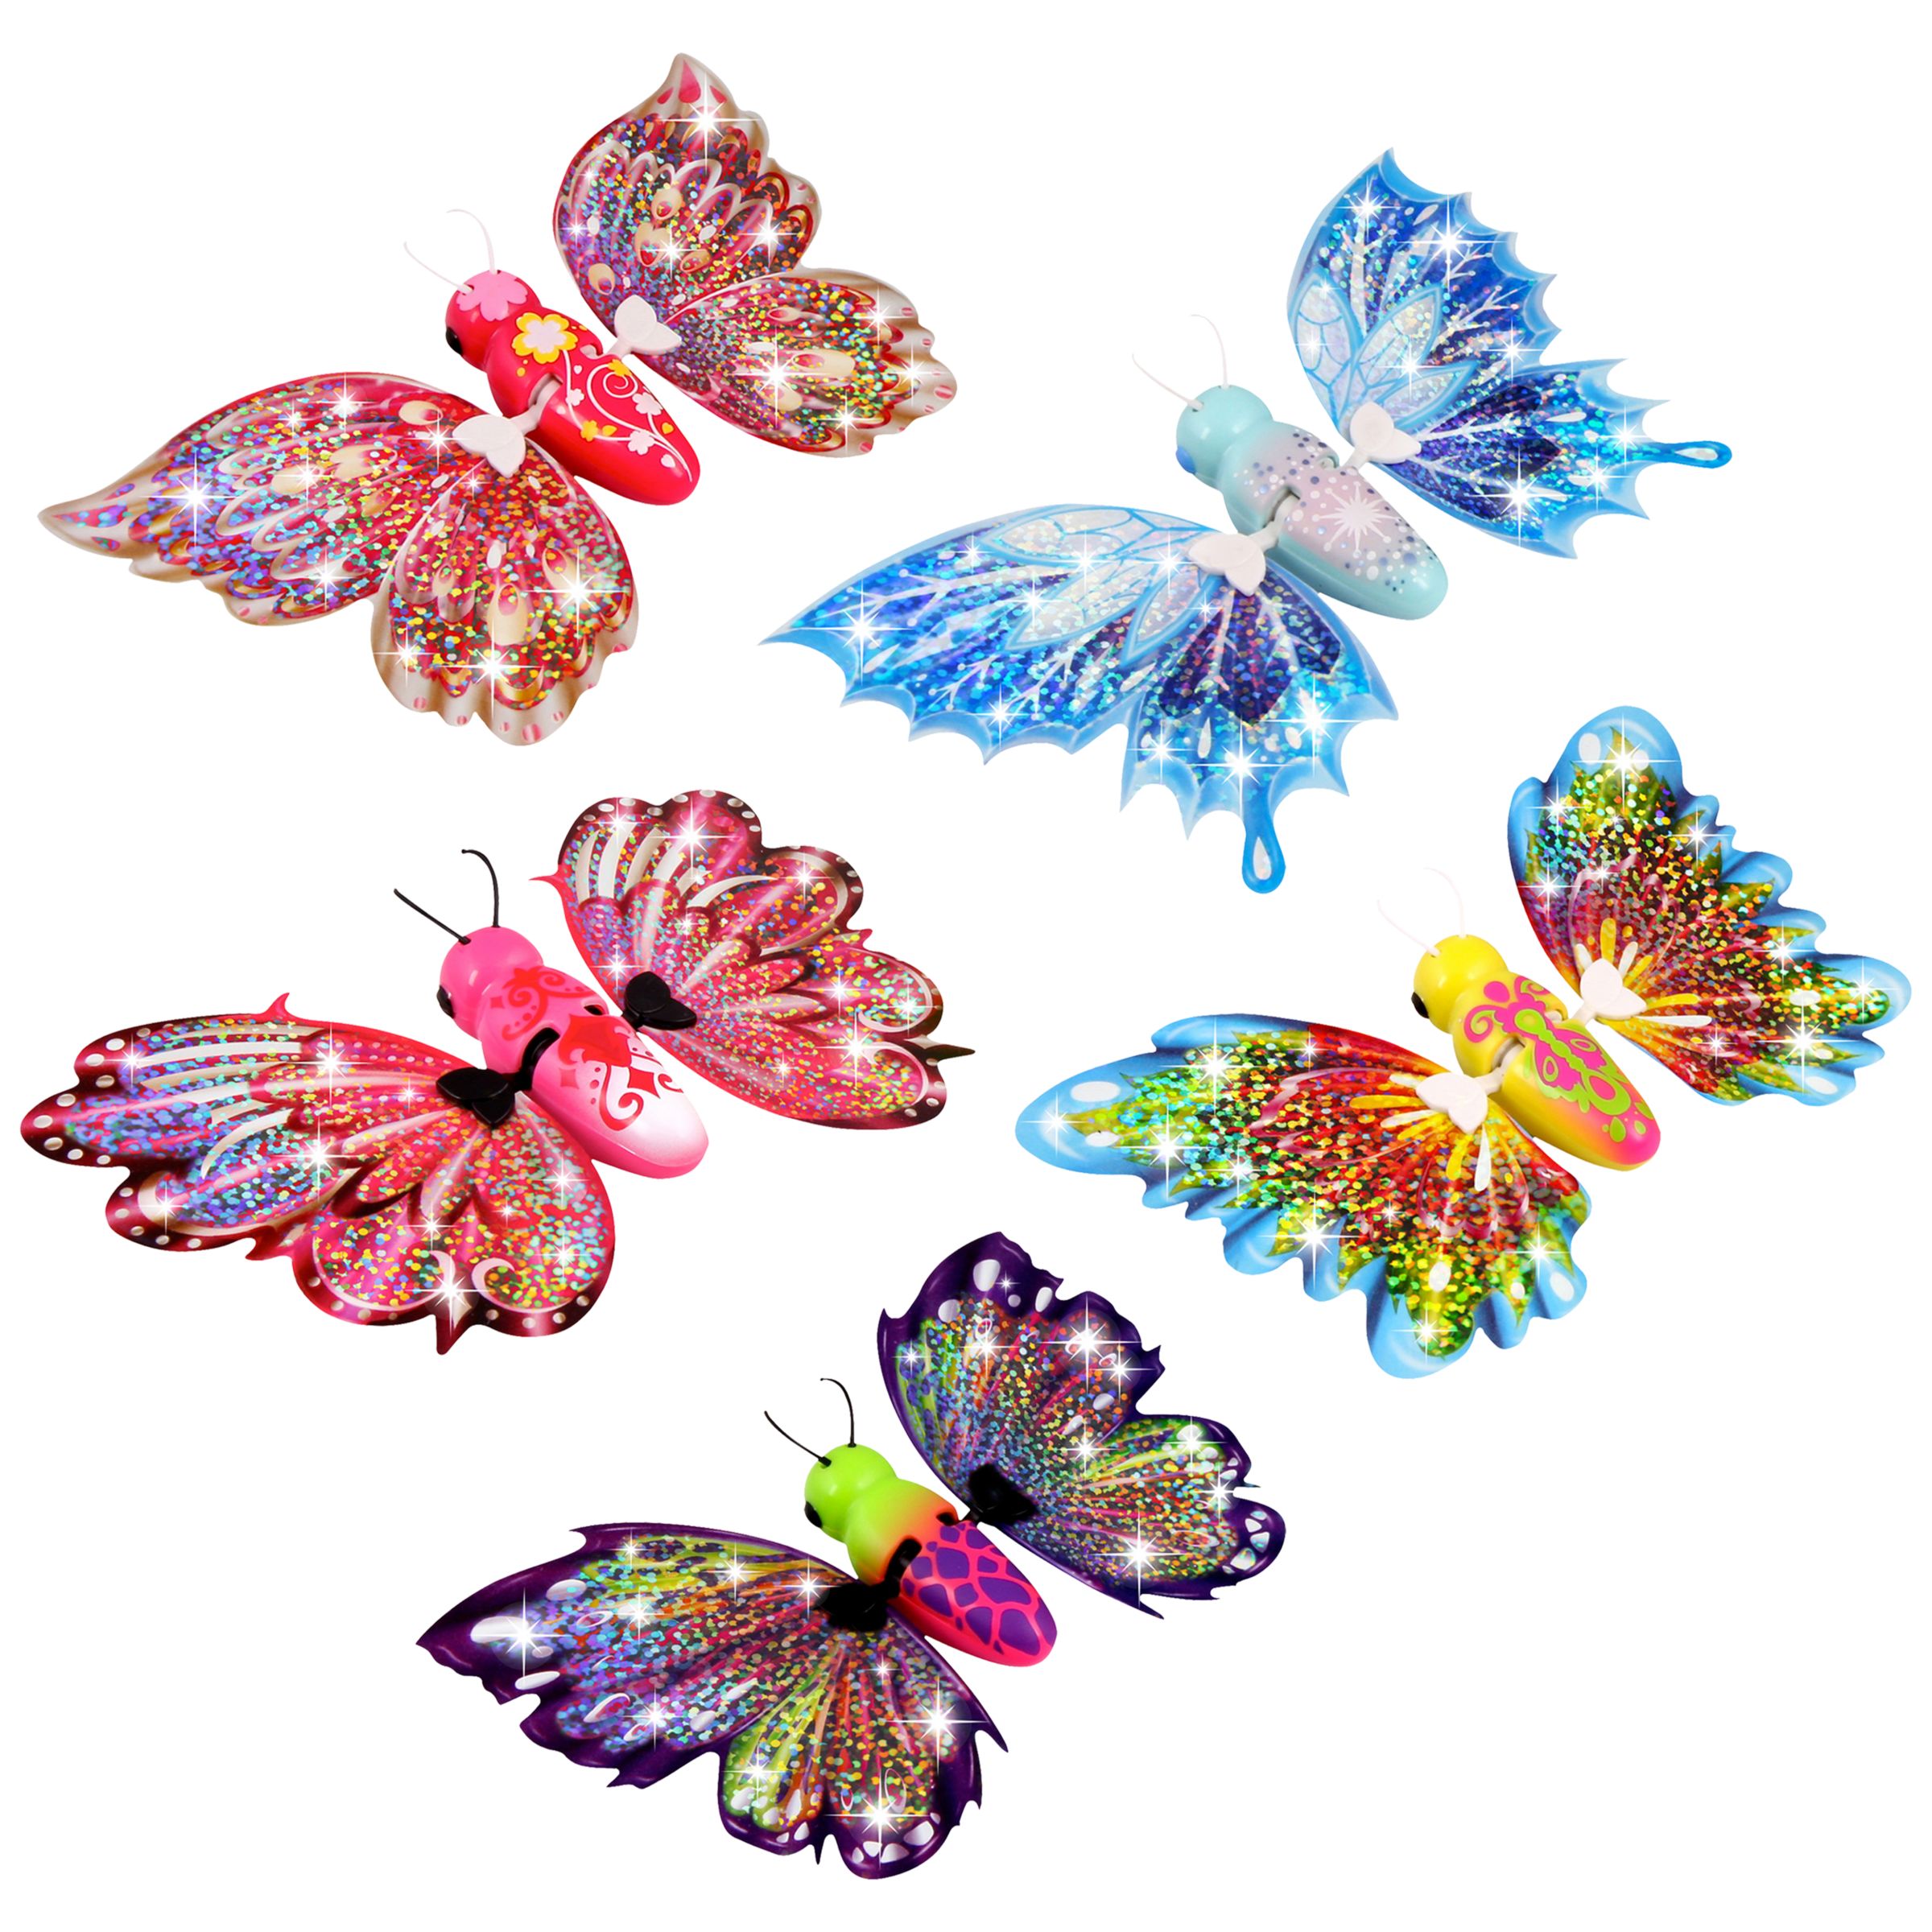 little live pets flutter wings butterflies